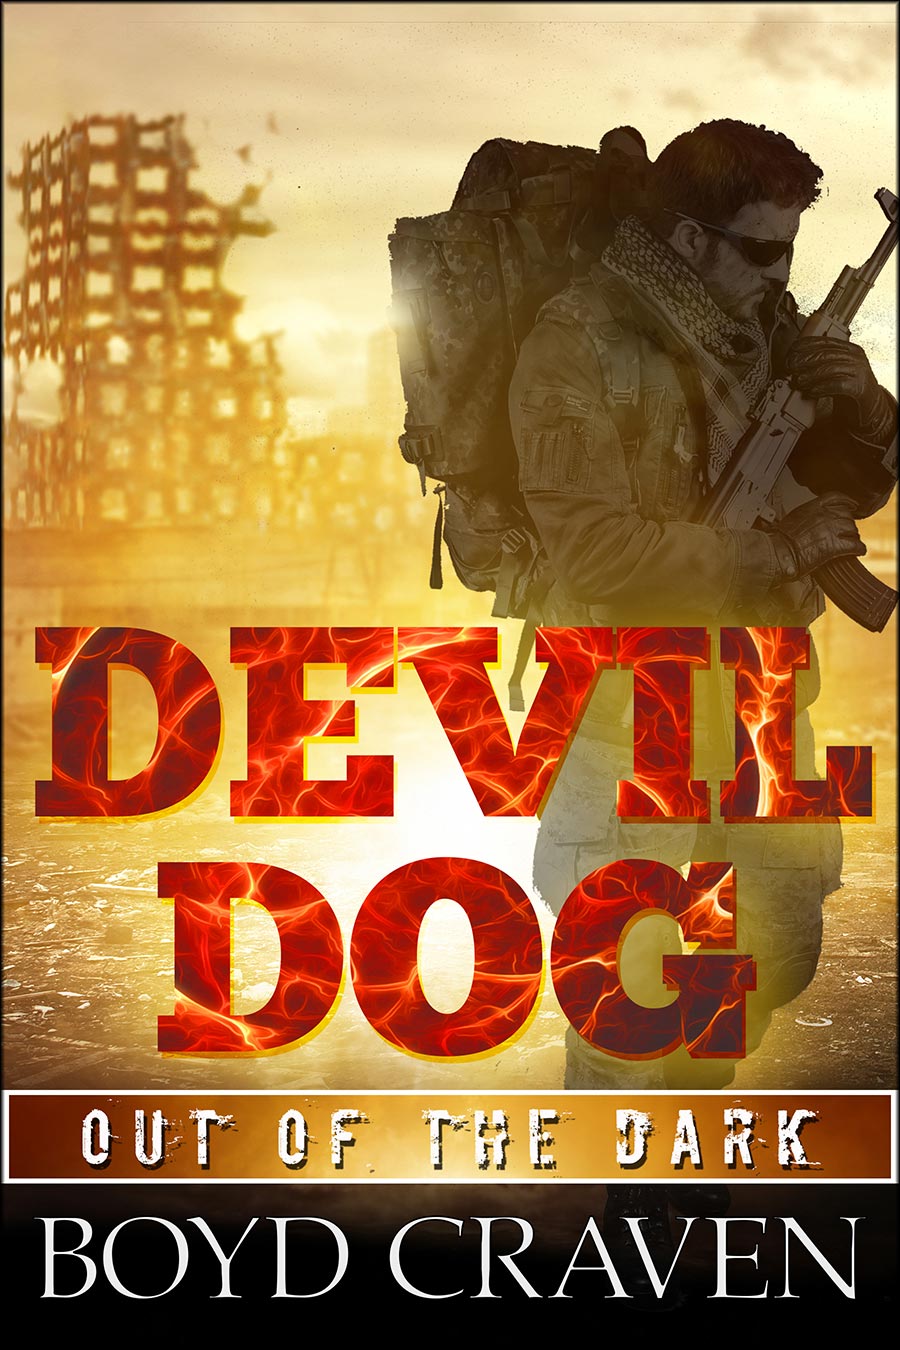 Devil-Dog.jpg